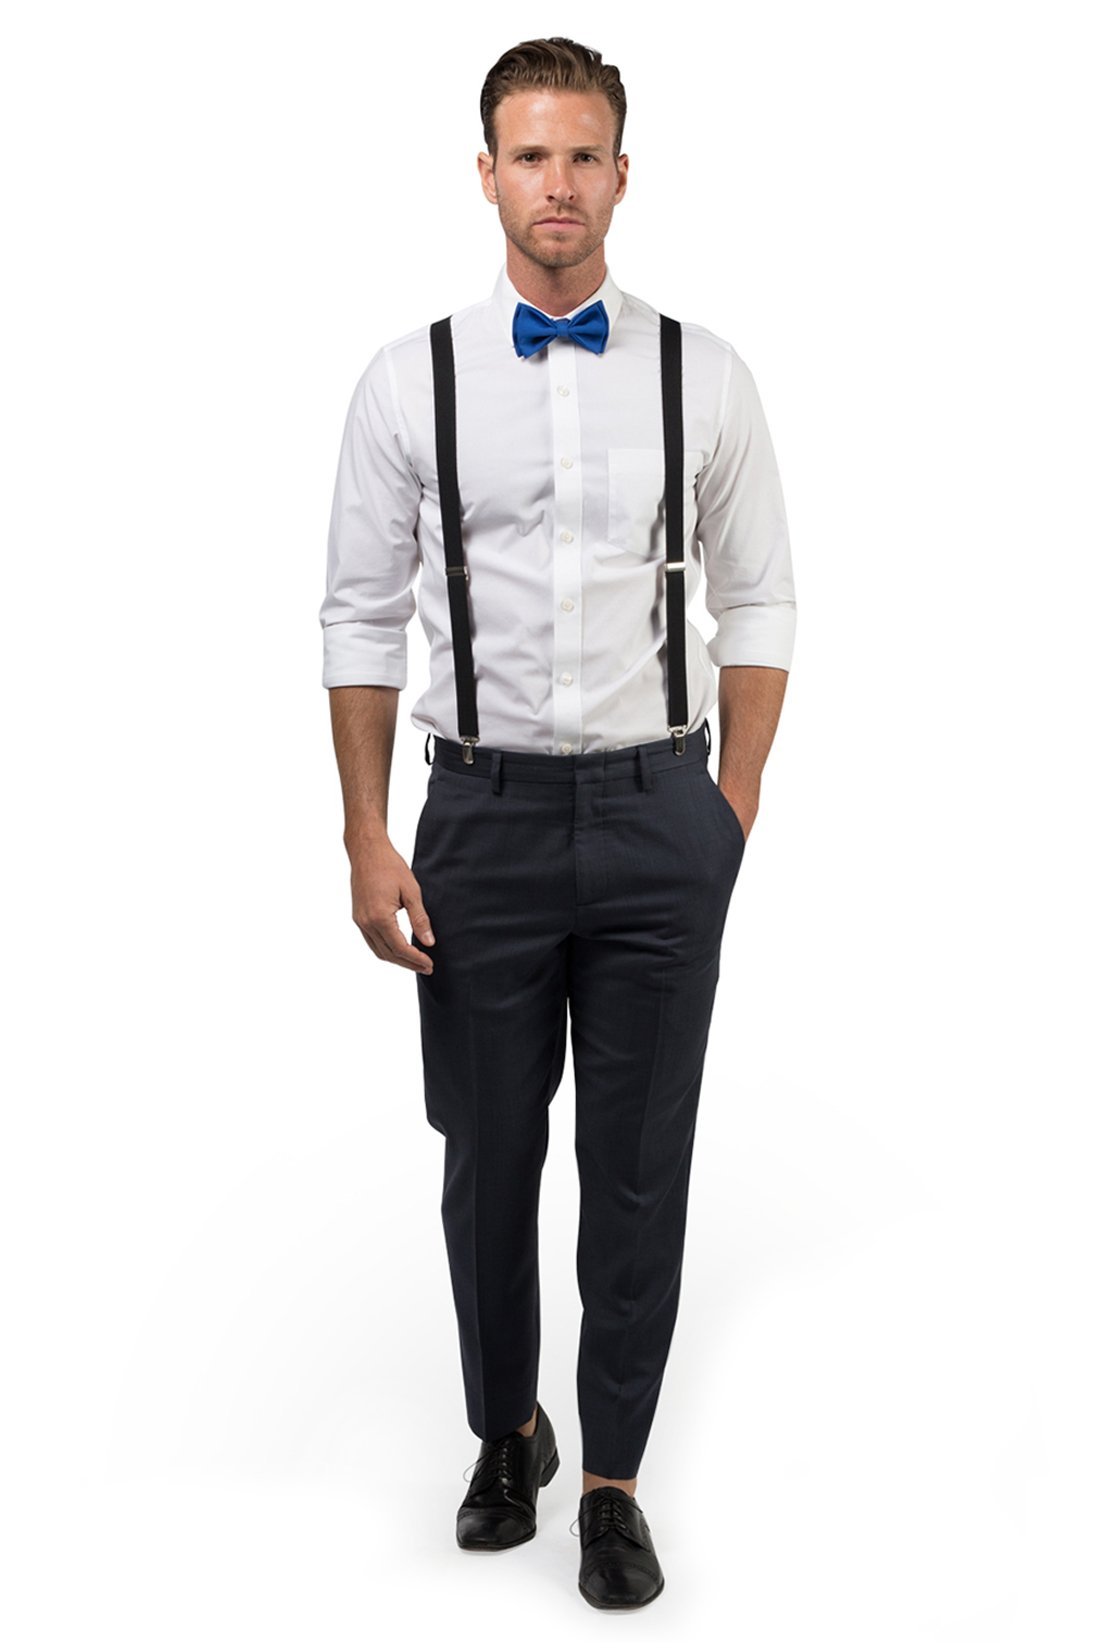 Black Suspenders & Royal Blue Bow Tie - Baby to Adult Sizes– Armoniia